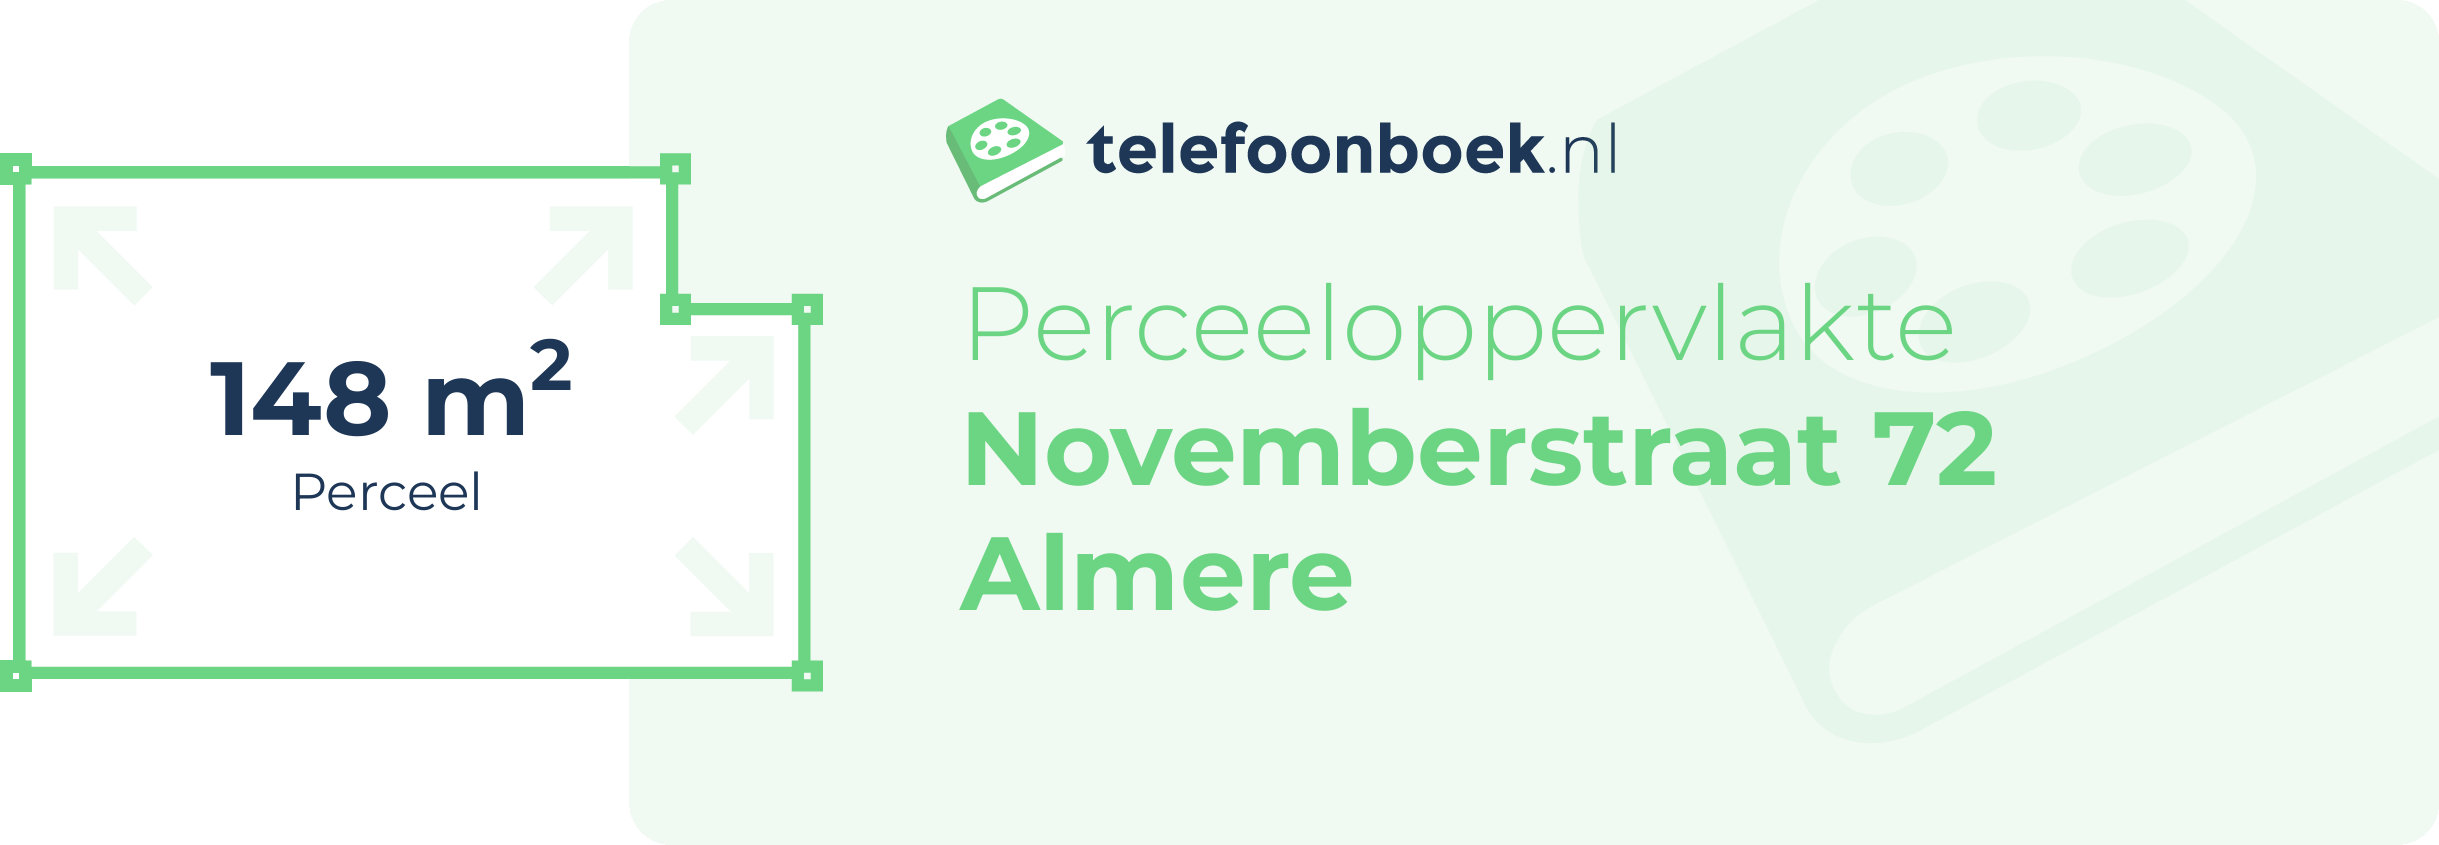 Perceeloppervlakte Novemberstraat 72 Almere